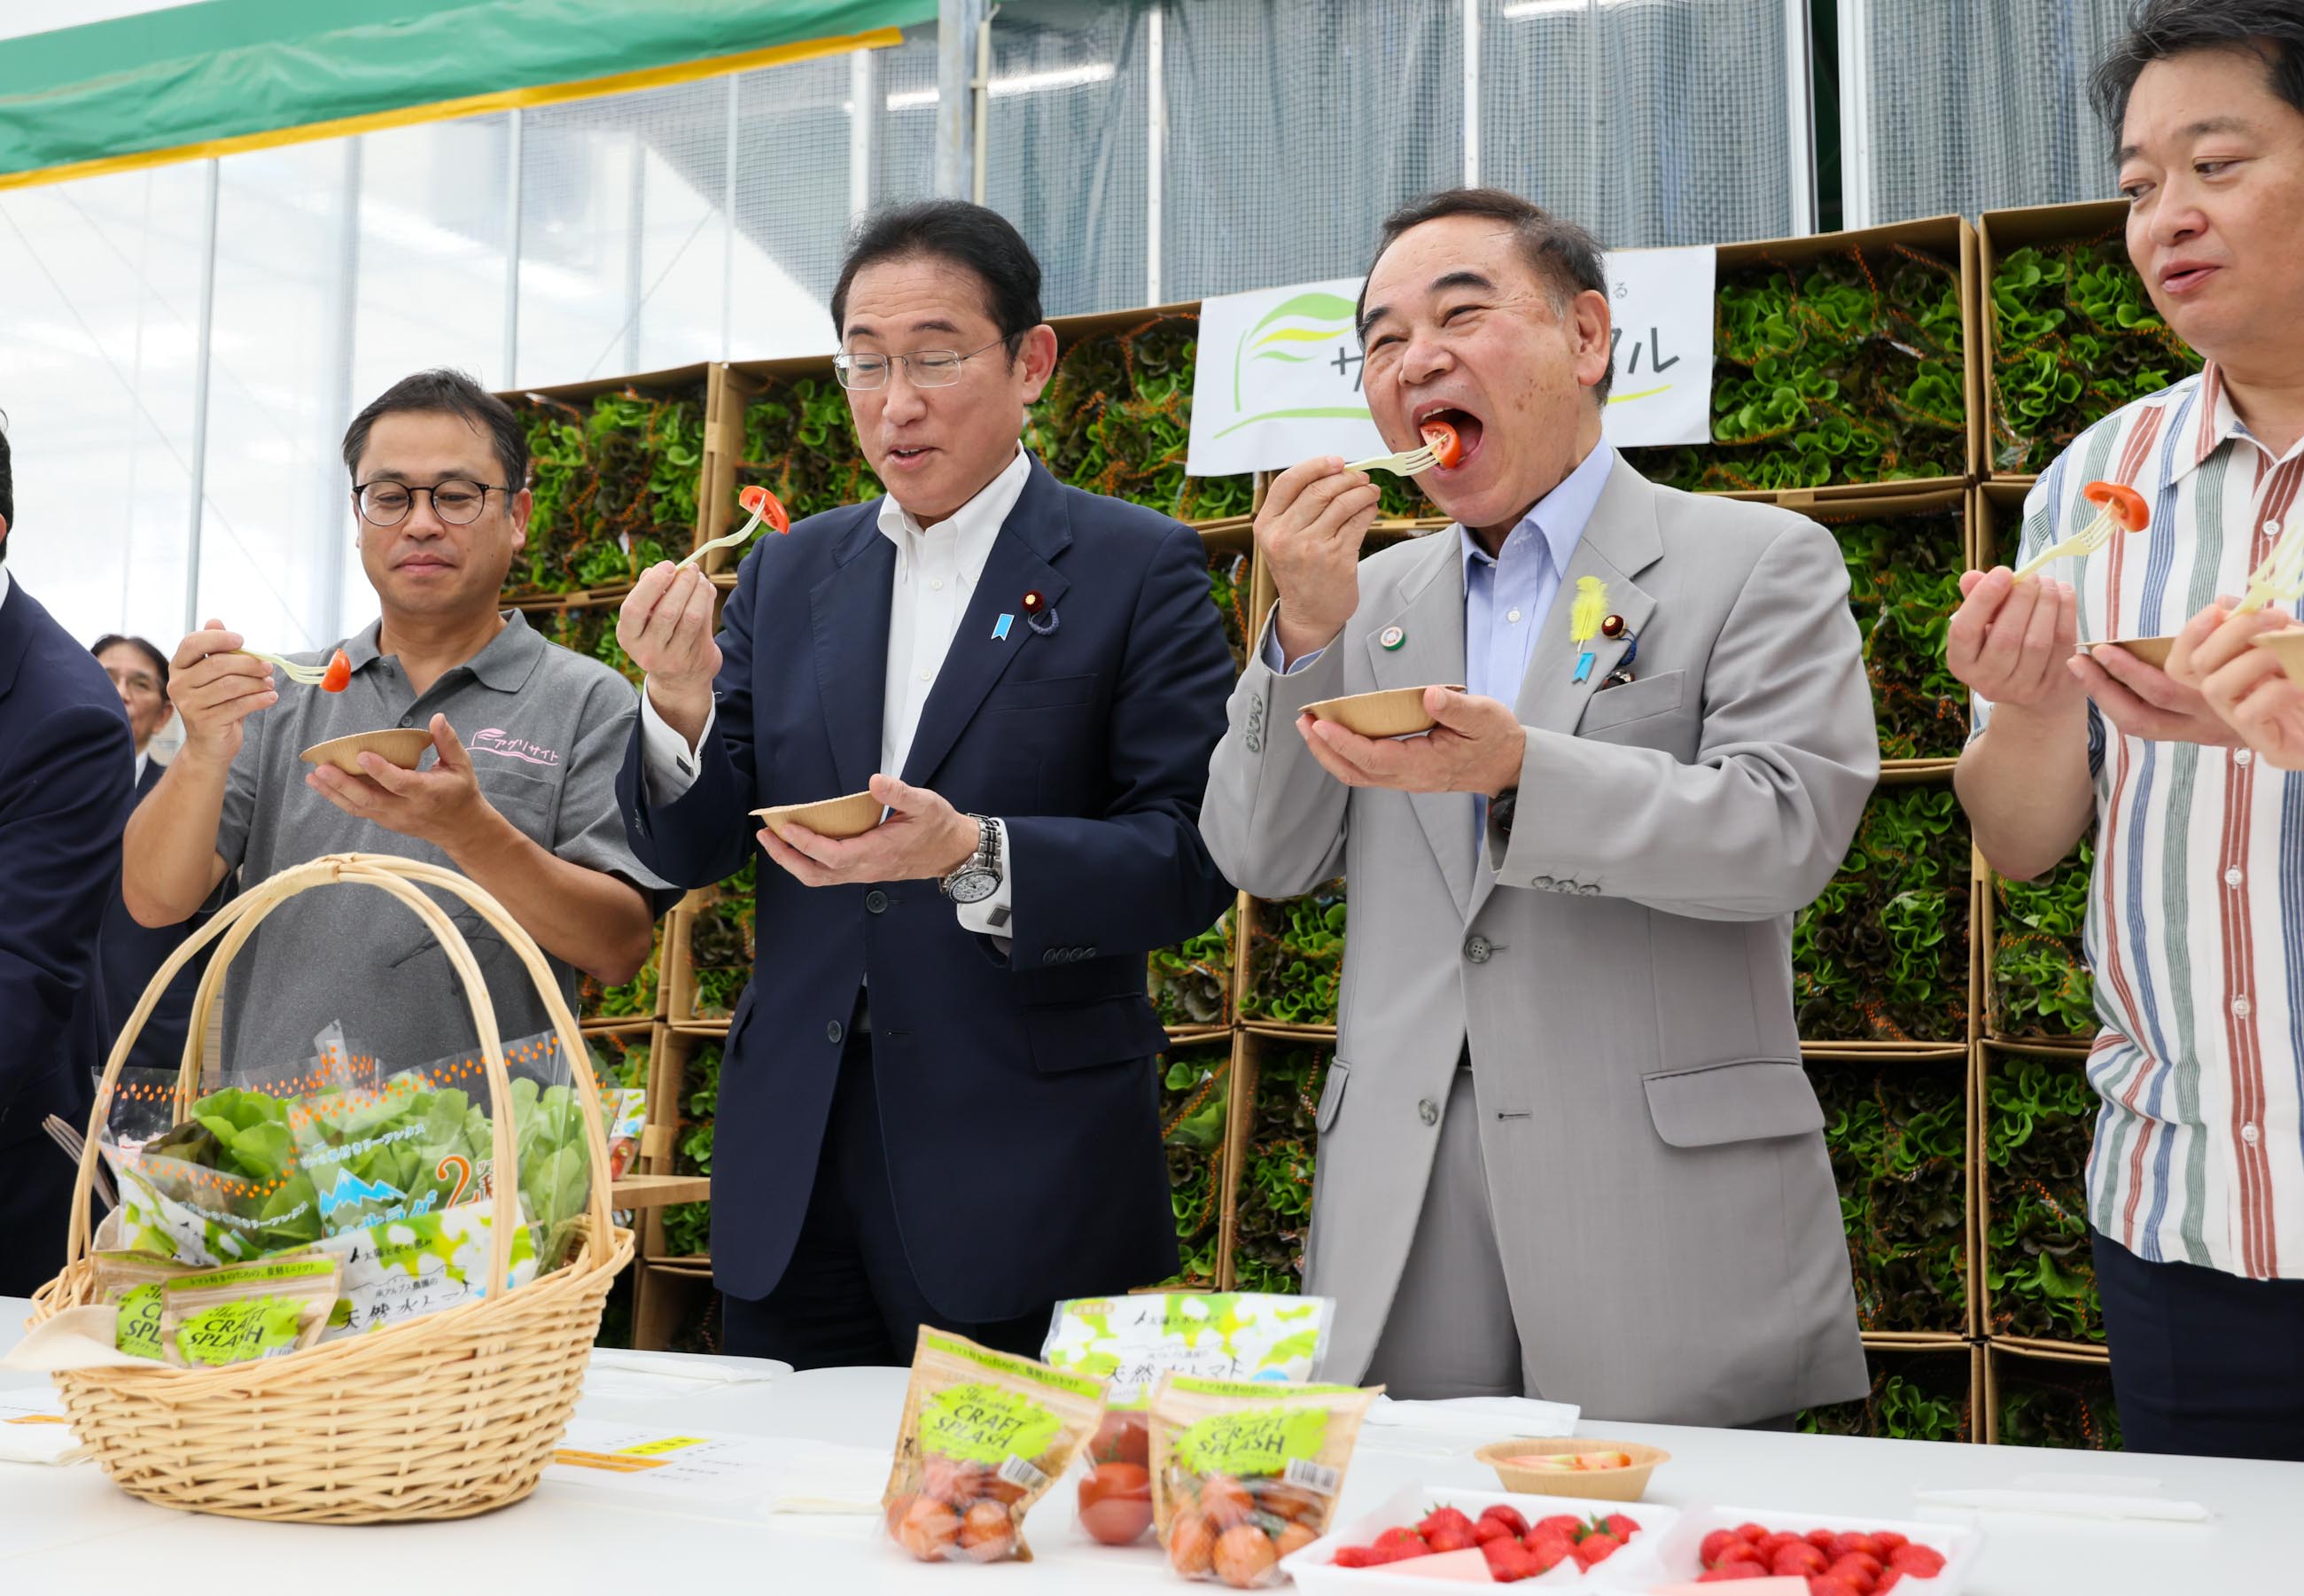 Prime Minister Kishida tasting tomato